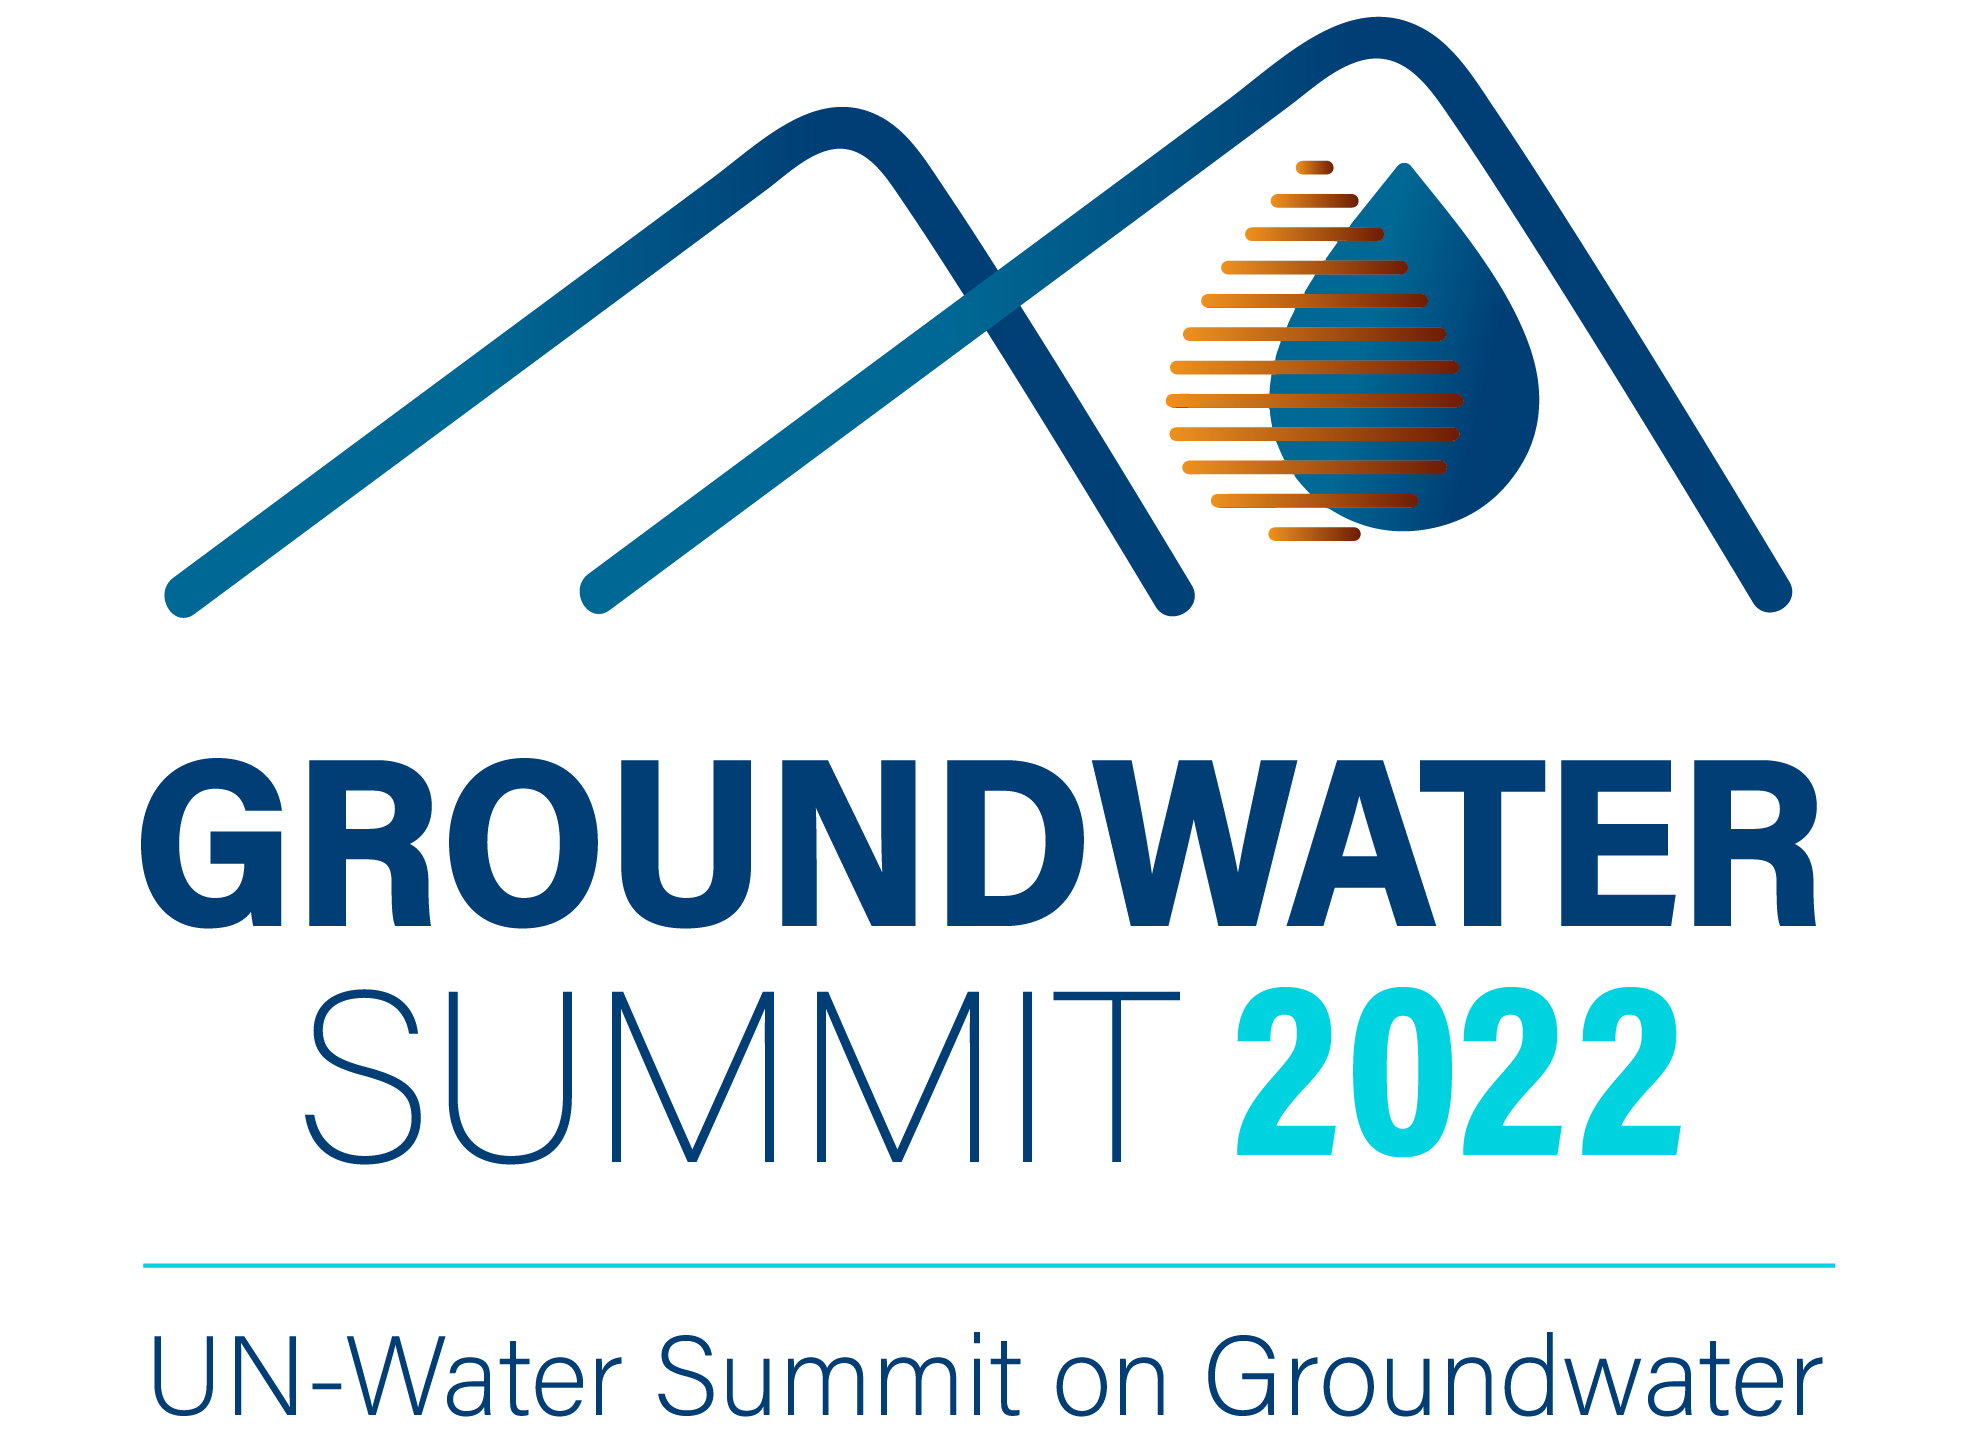 Groundwater Summit, Paris (6 – 8 December 2022)